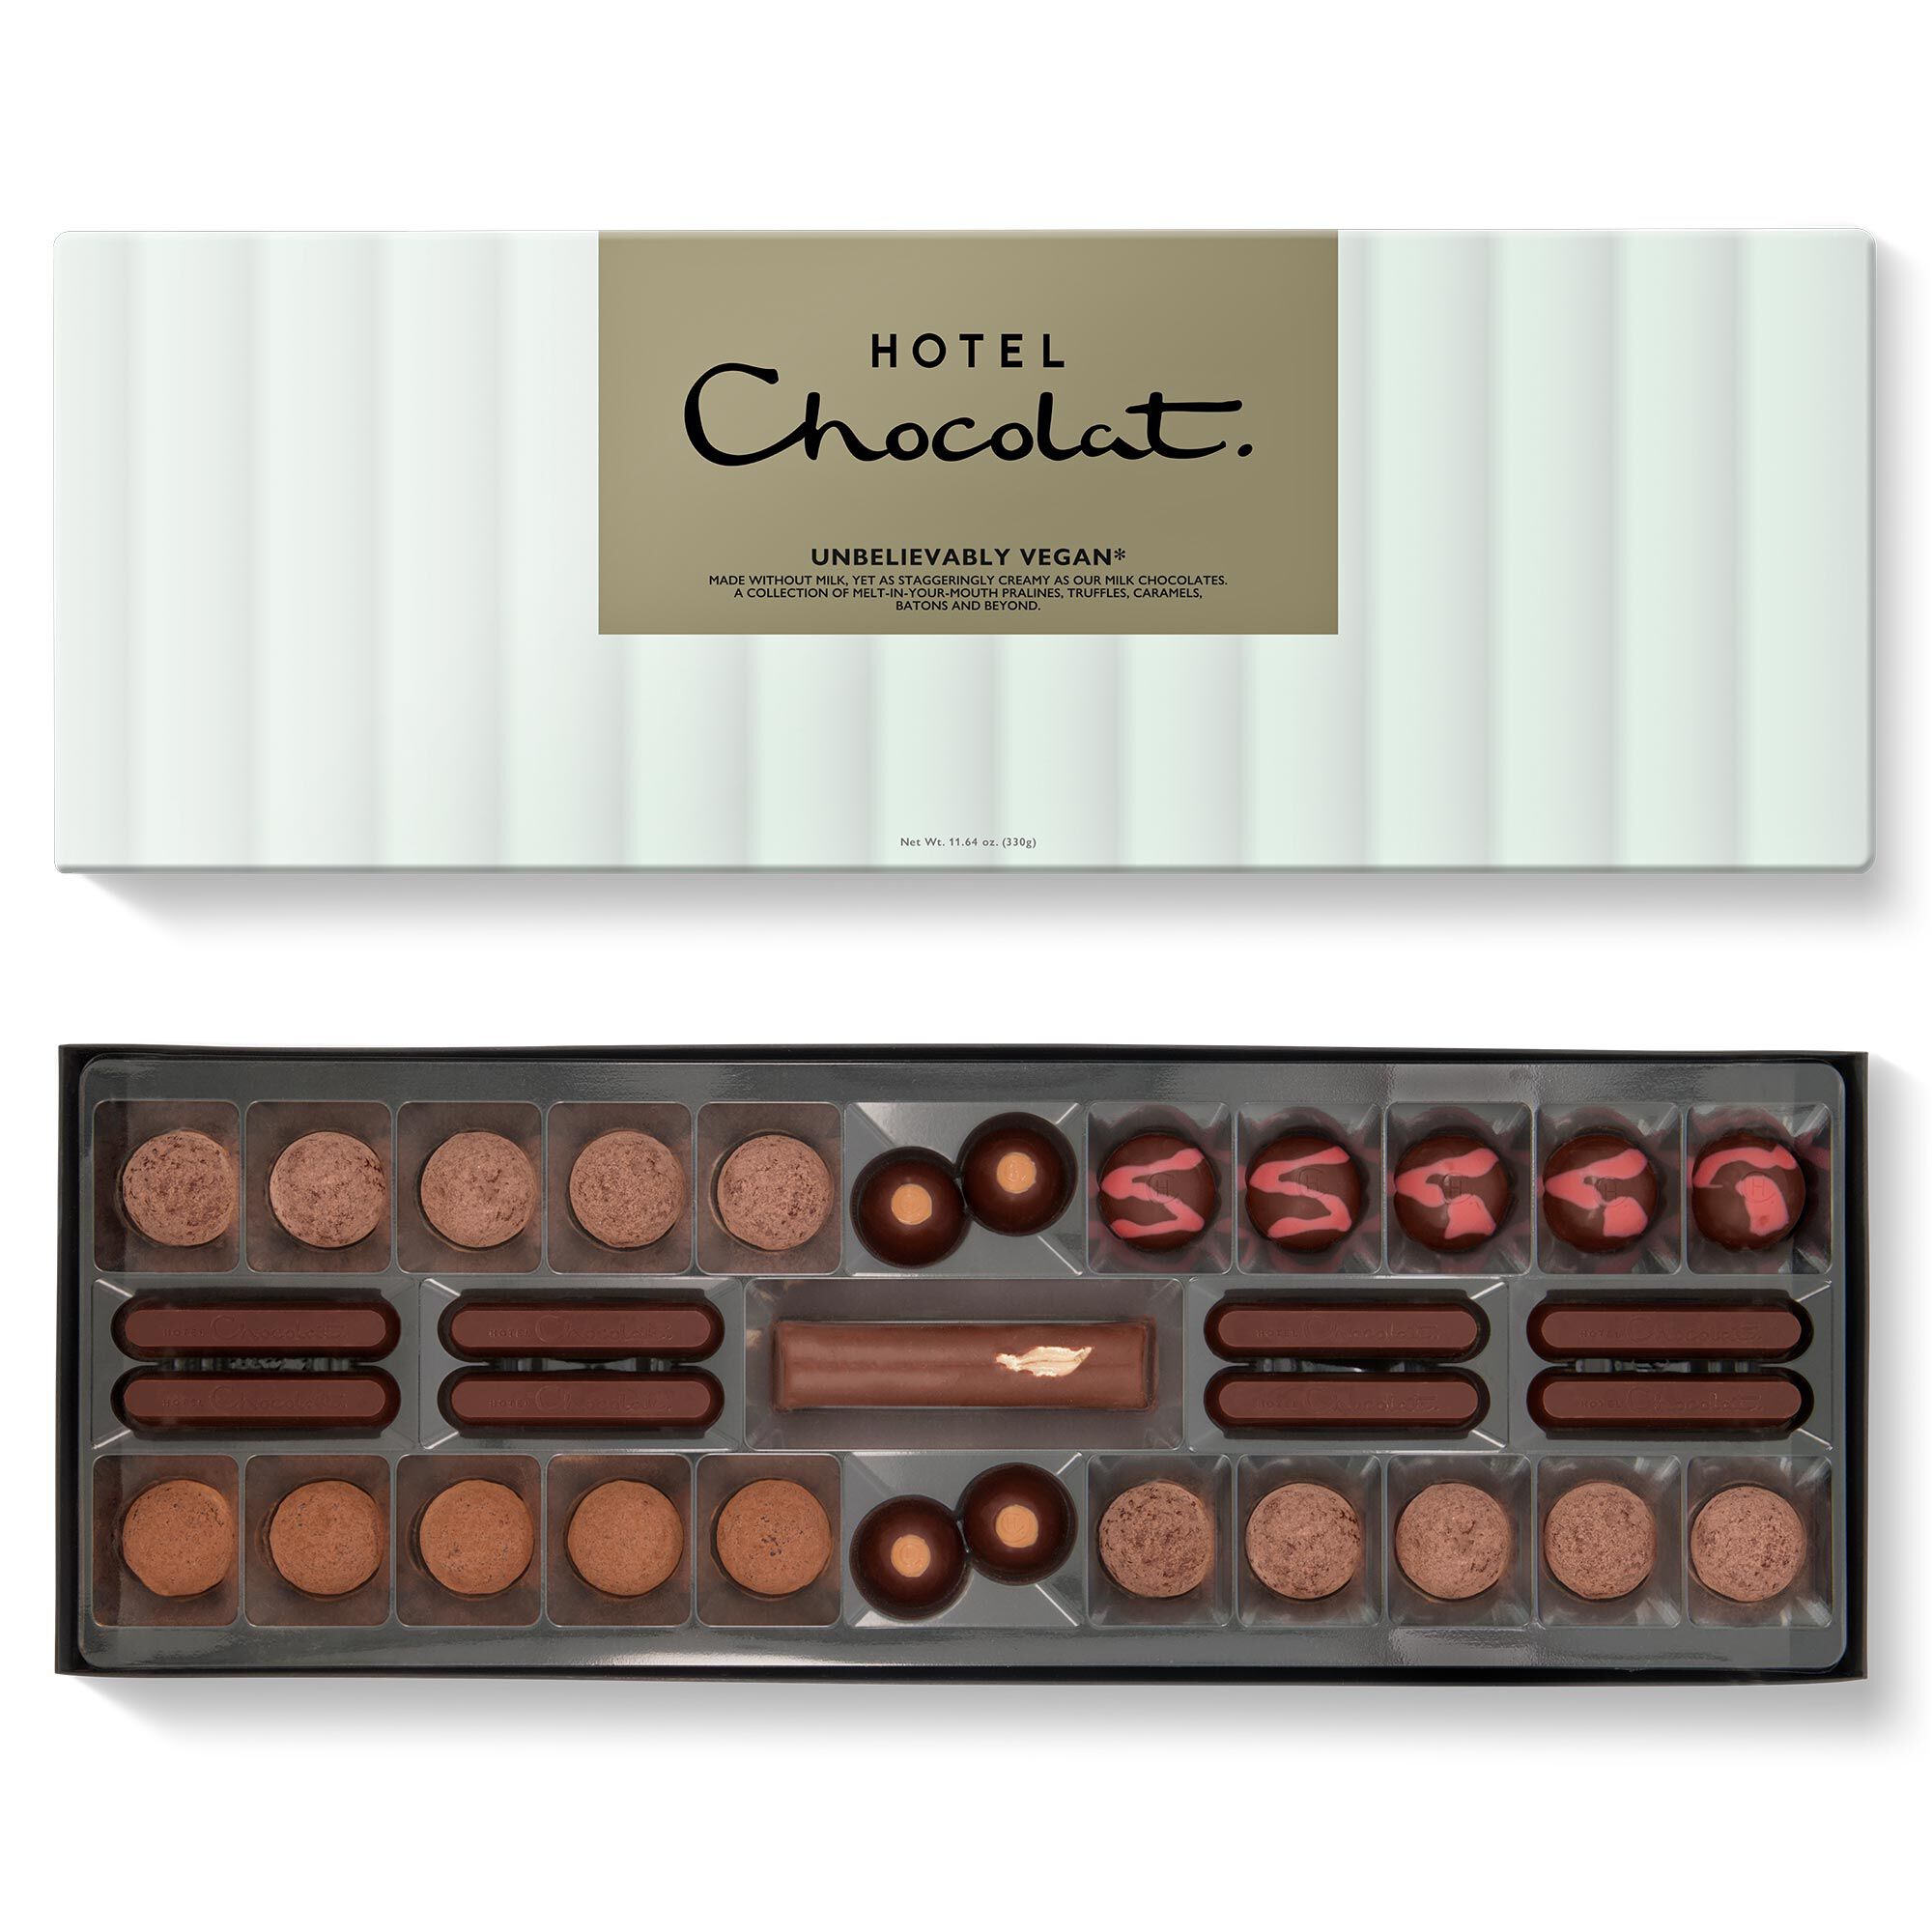 Hotel Chocolat 'Unbelievably Vegan' box of chocolates. 